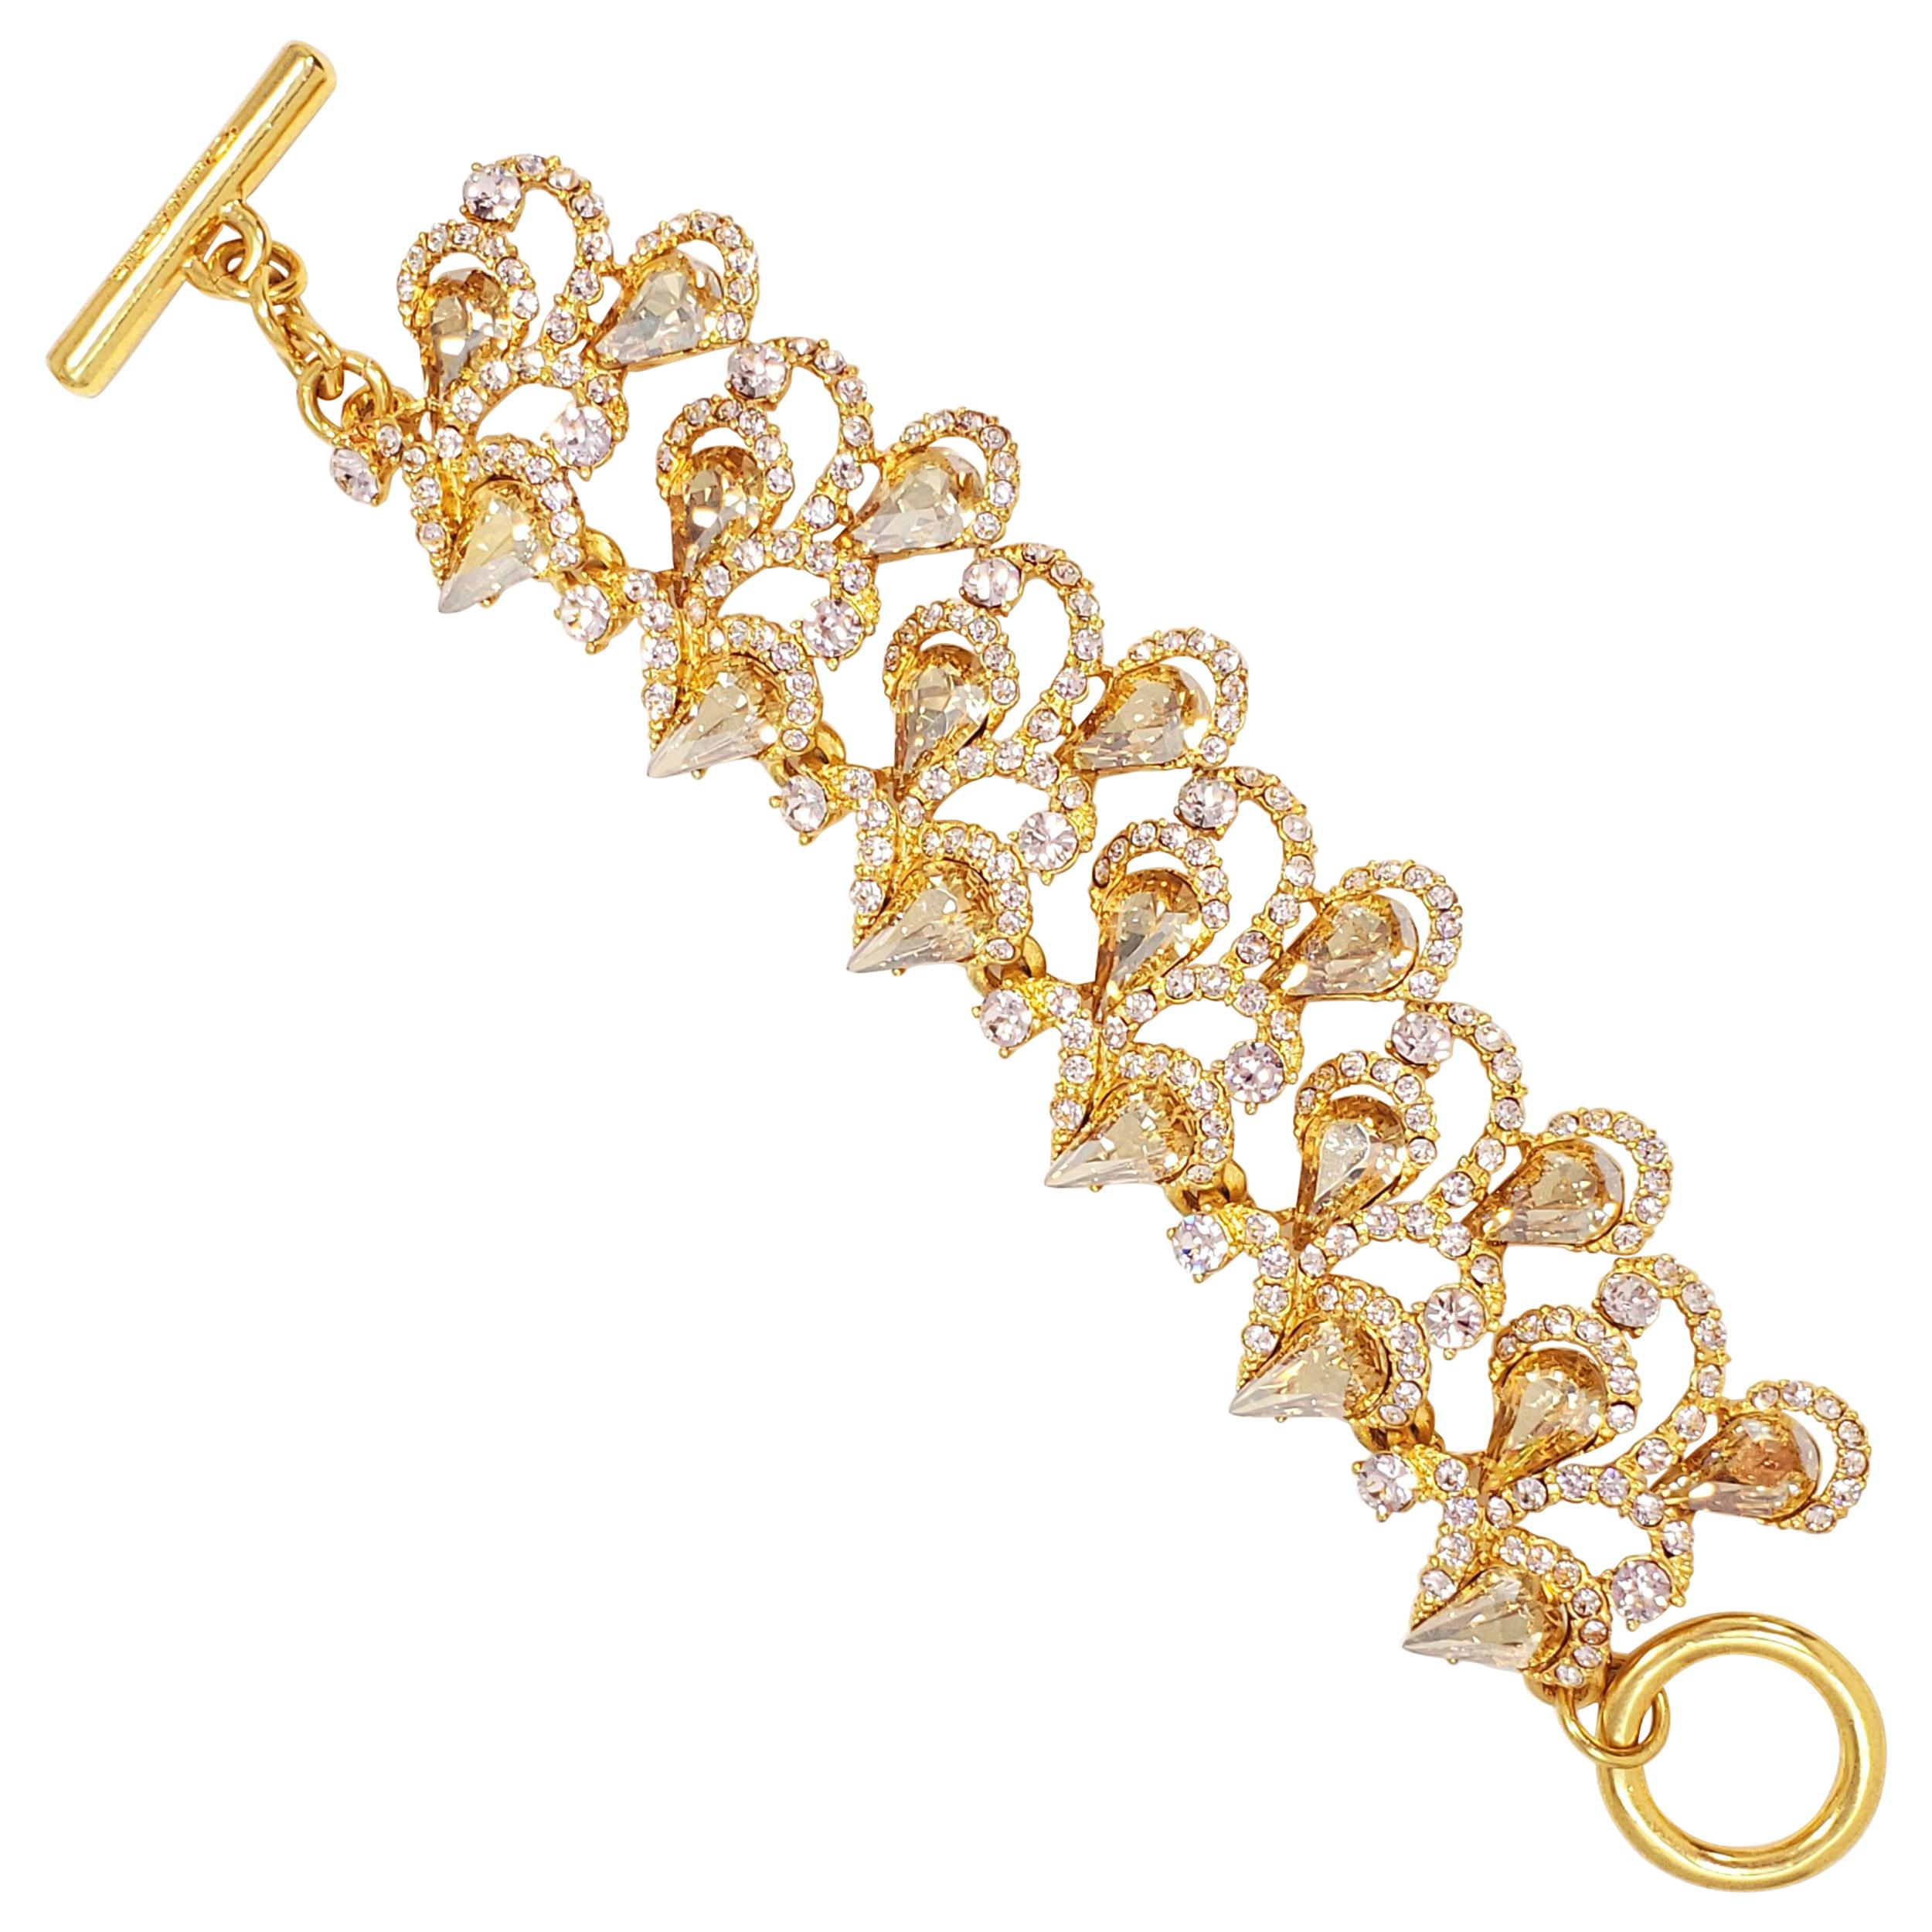 Oscar de la Renta Pear-cut Clear and Topaz Crystal Toggle Clasp Bracelet in Gold